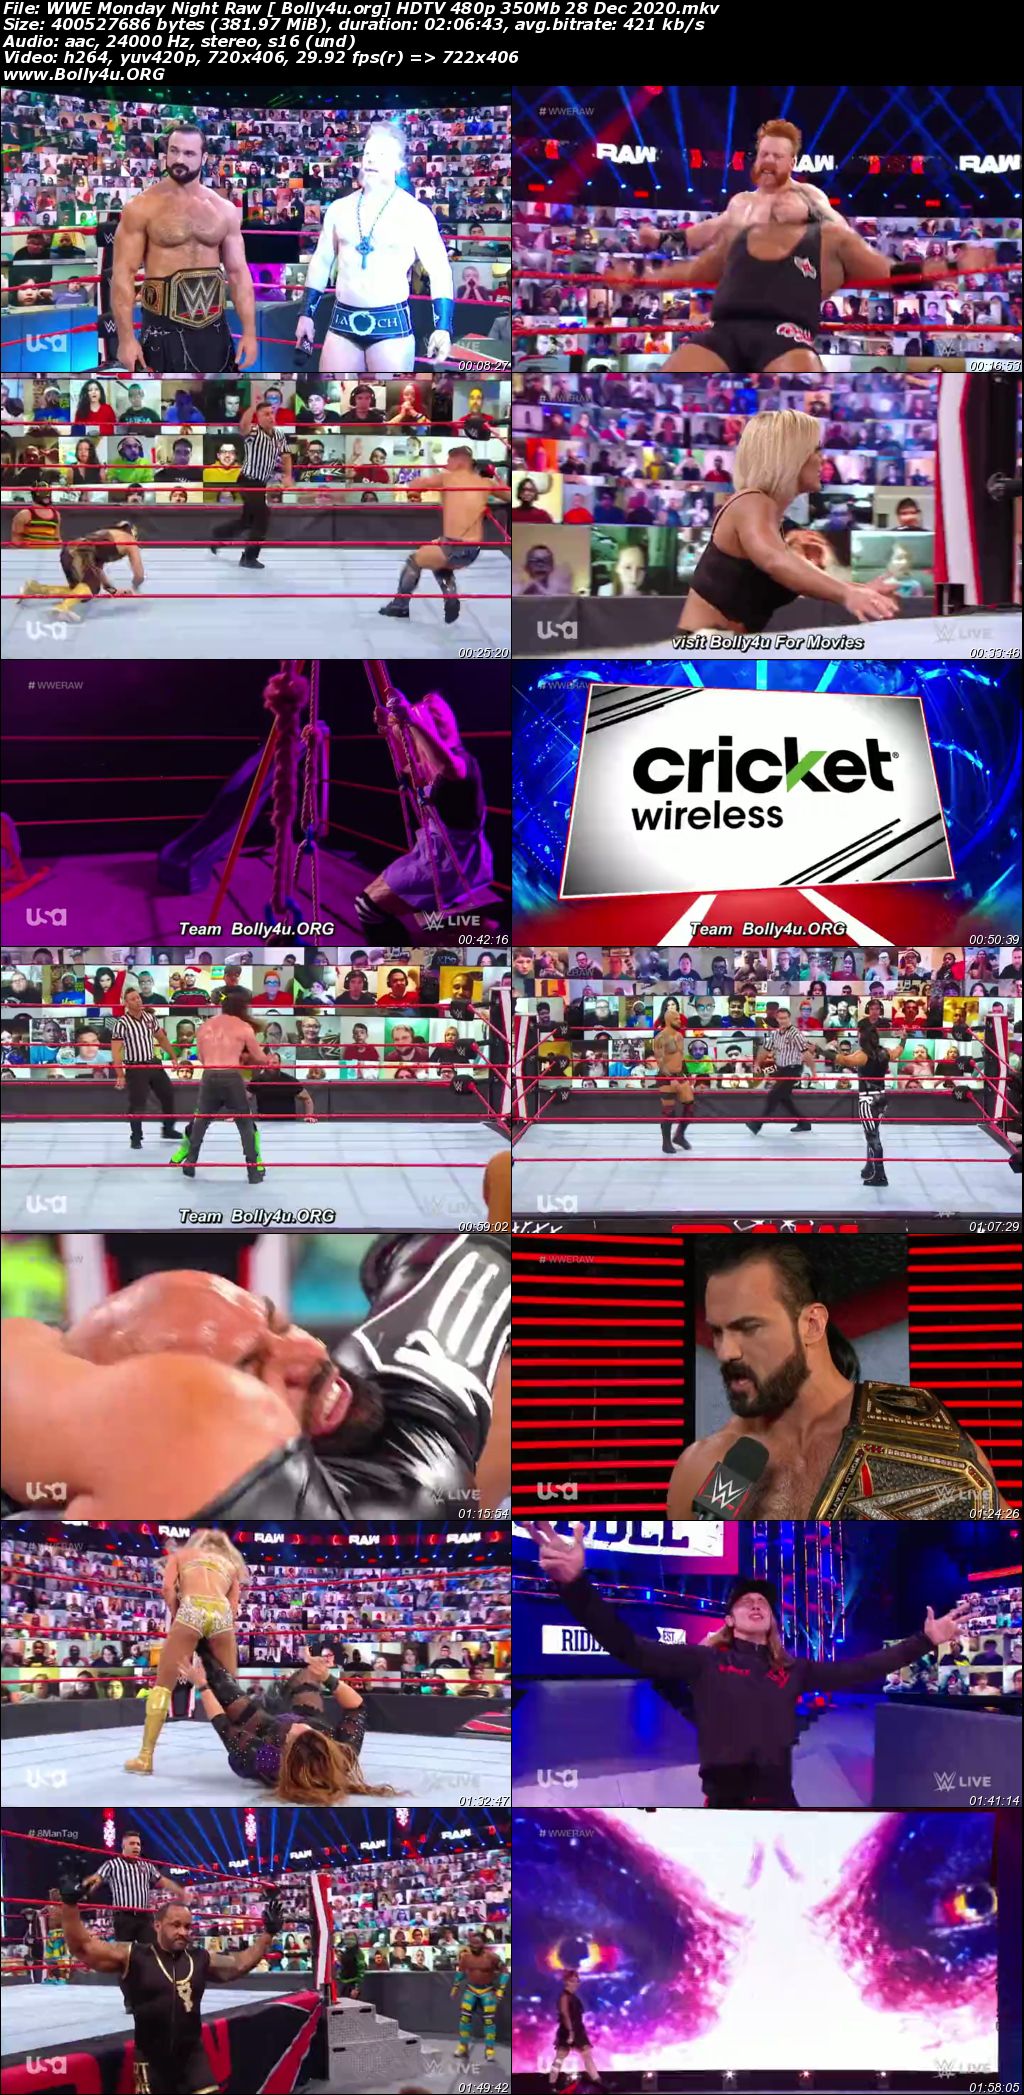 WWE Monday Night Raw HDTV 480p 350Mb 28 Dec 2020 Download